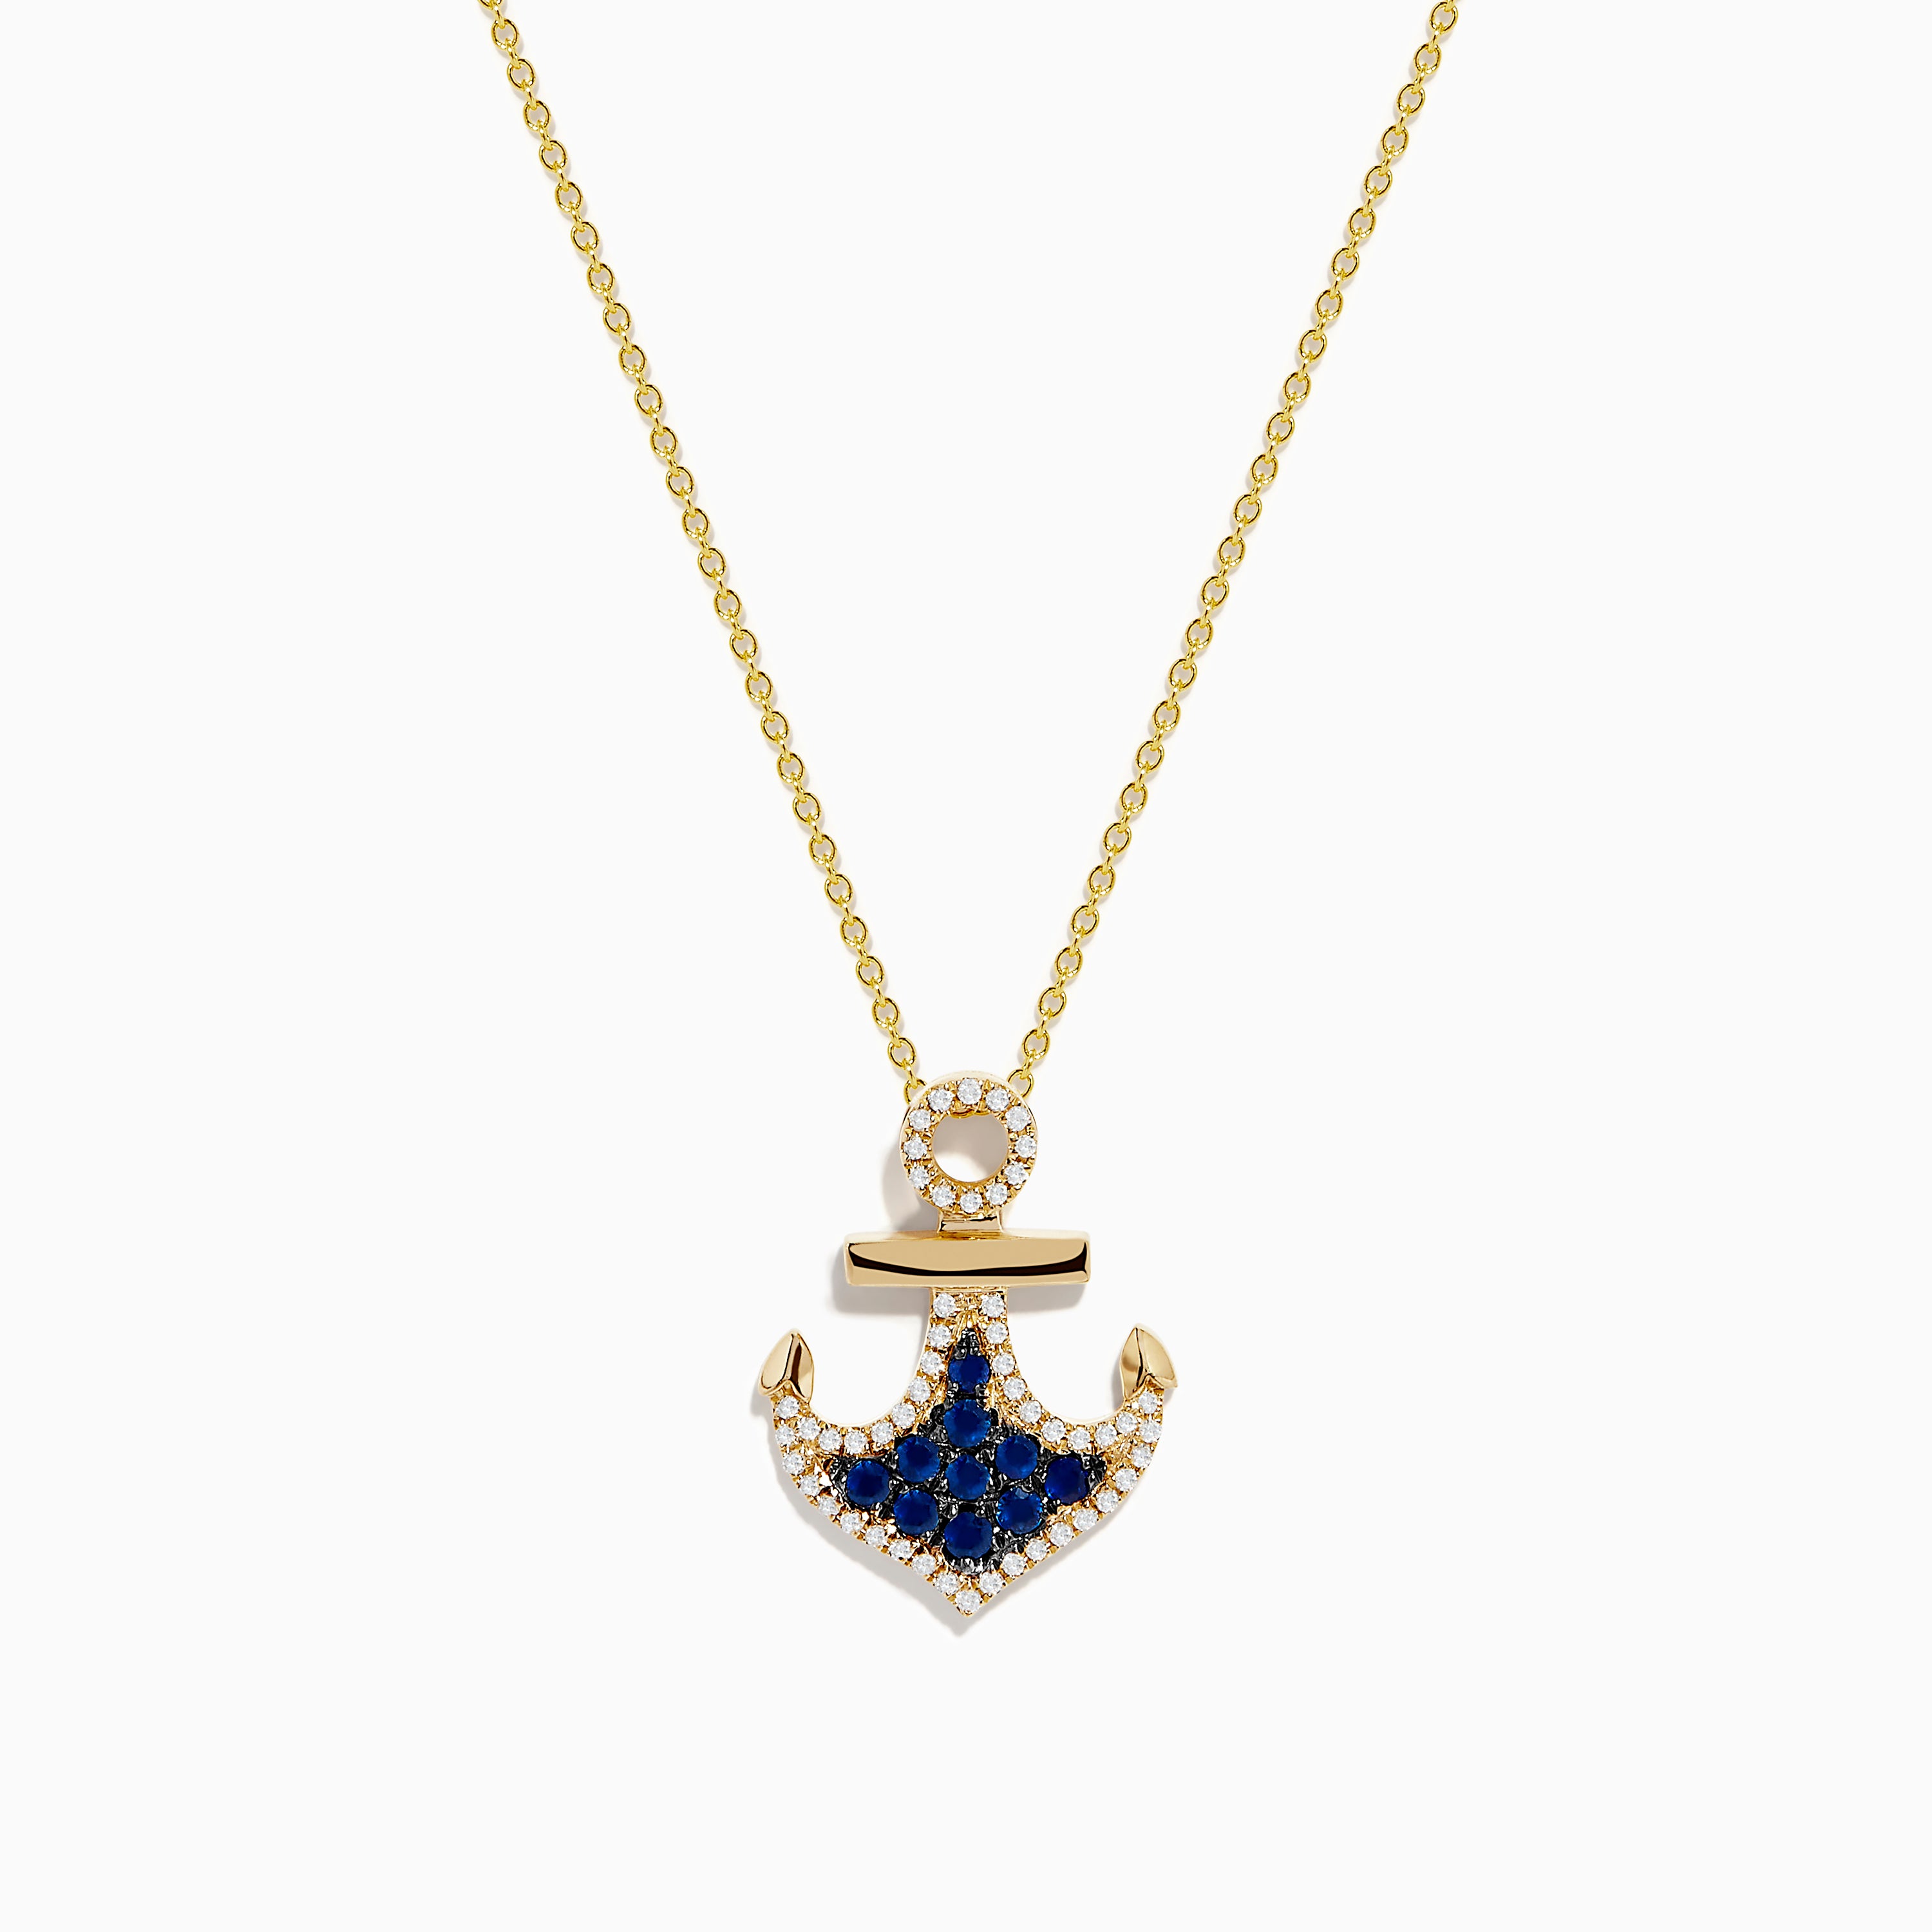 Antique Victorian Diamond Anchor Pendant Necklace